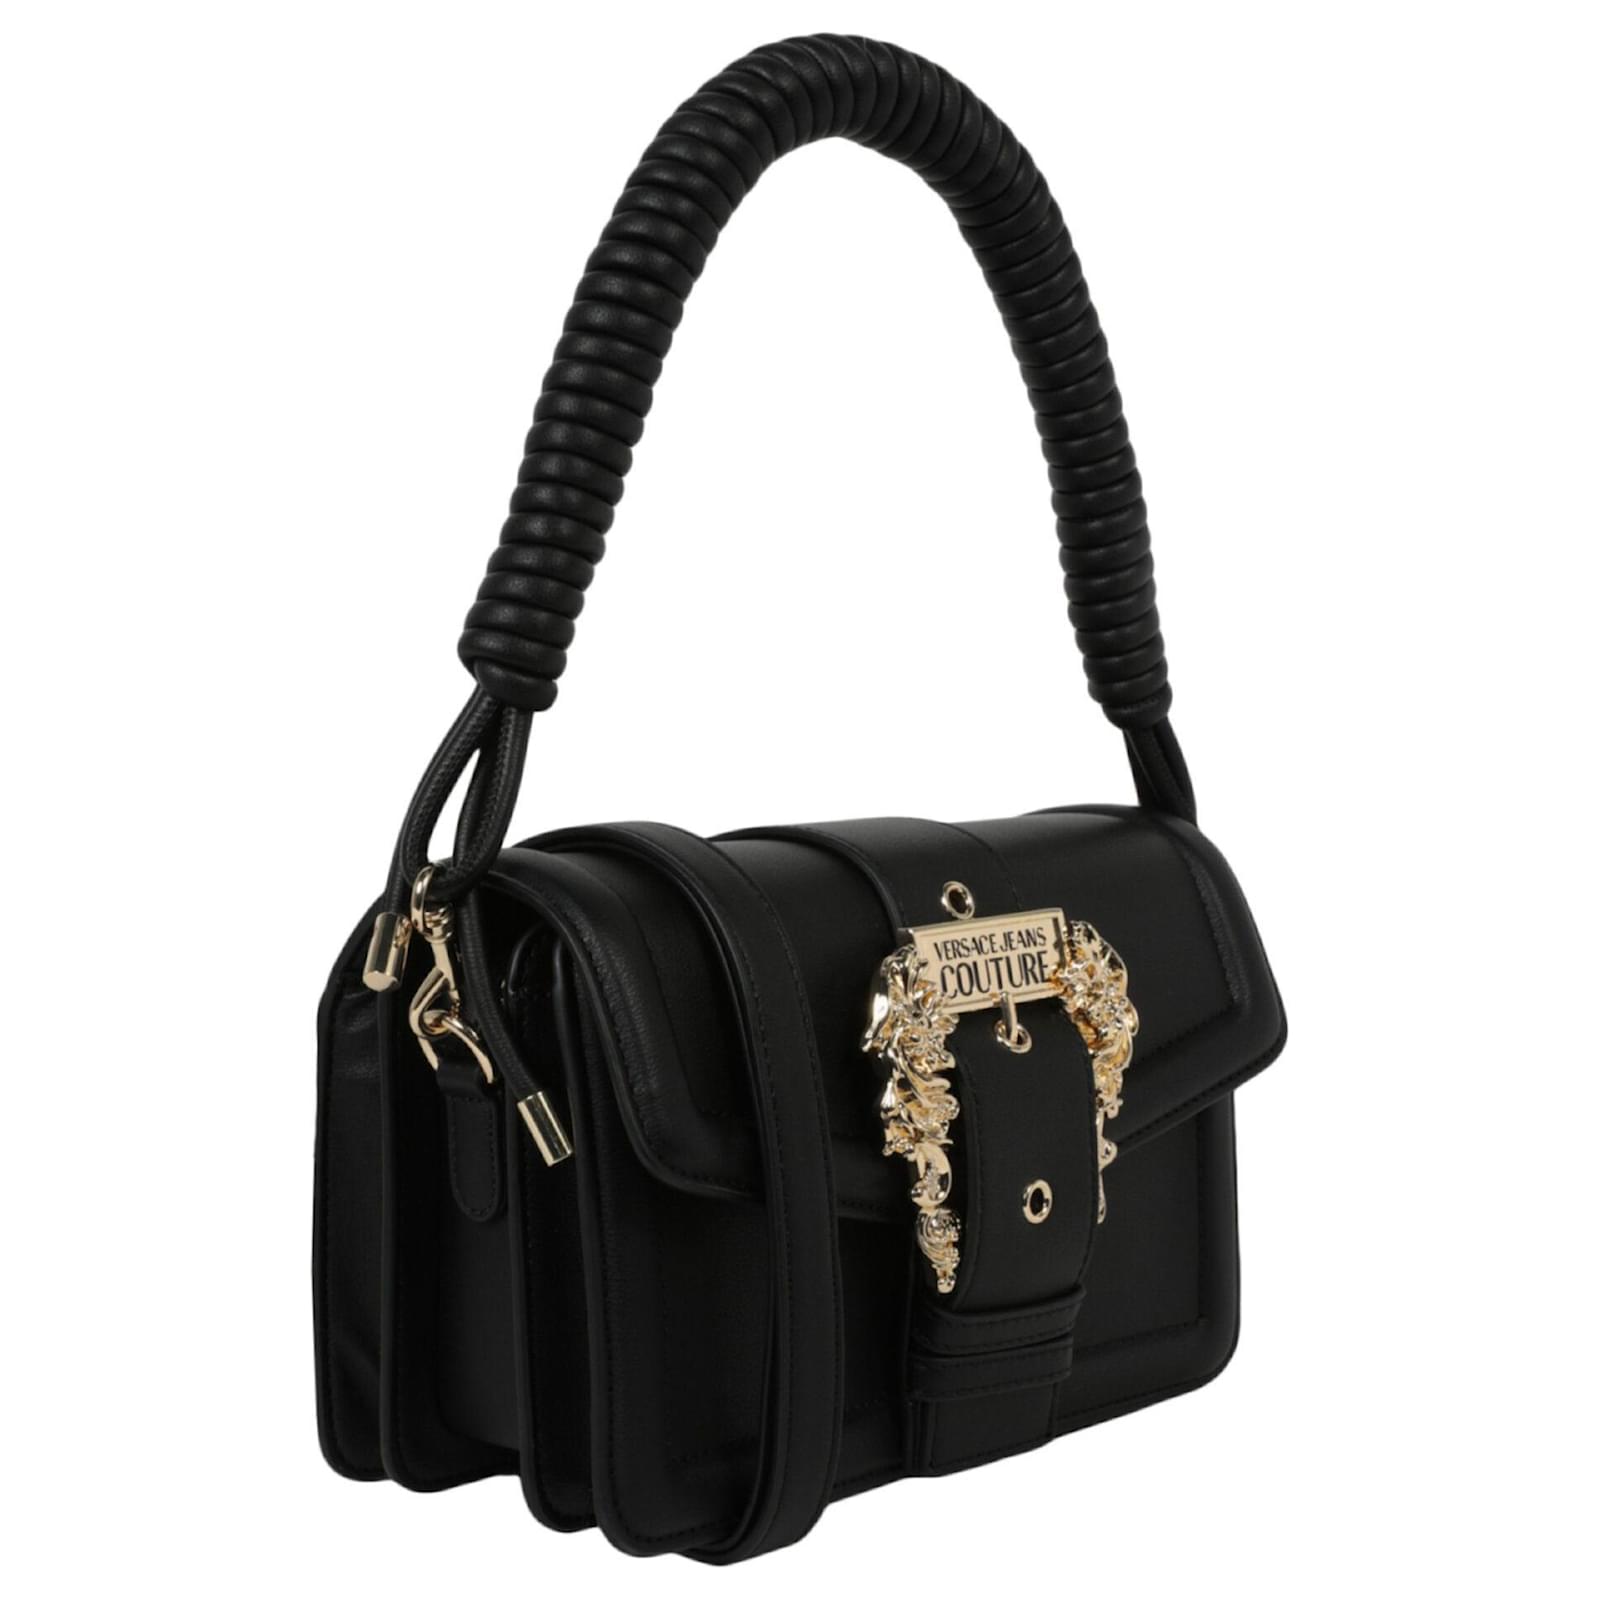 Versace Jeans Couture Buckle Shoulder Bag, Black: Handbags